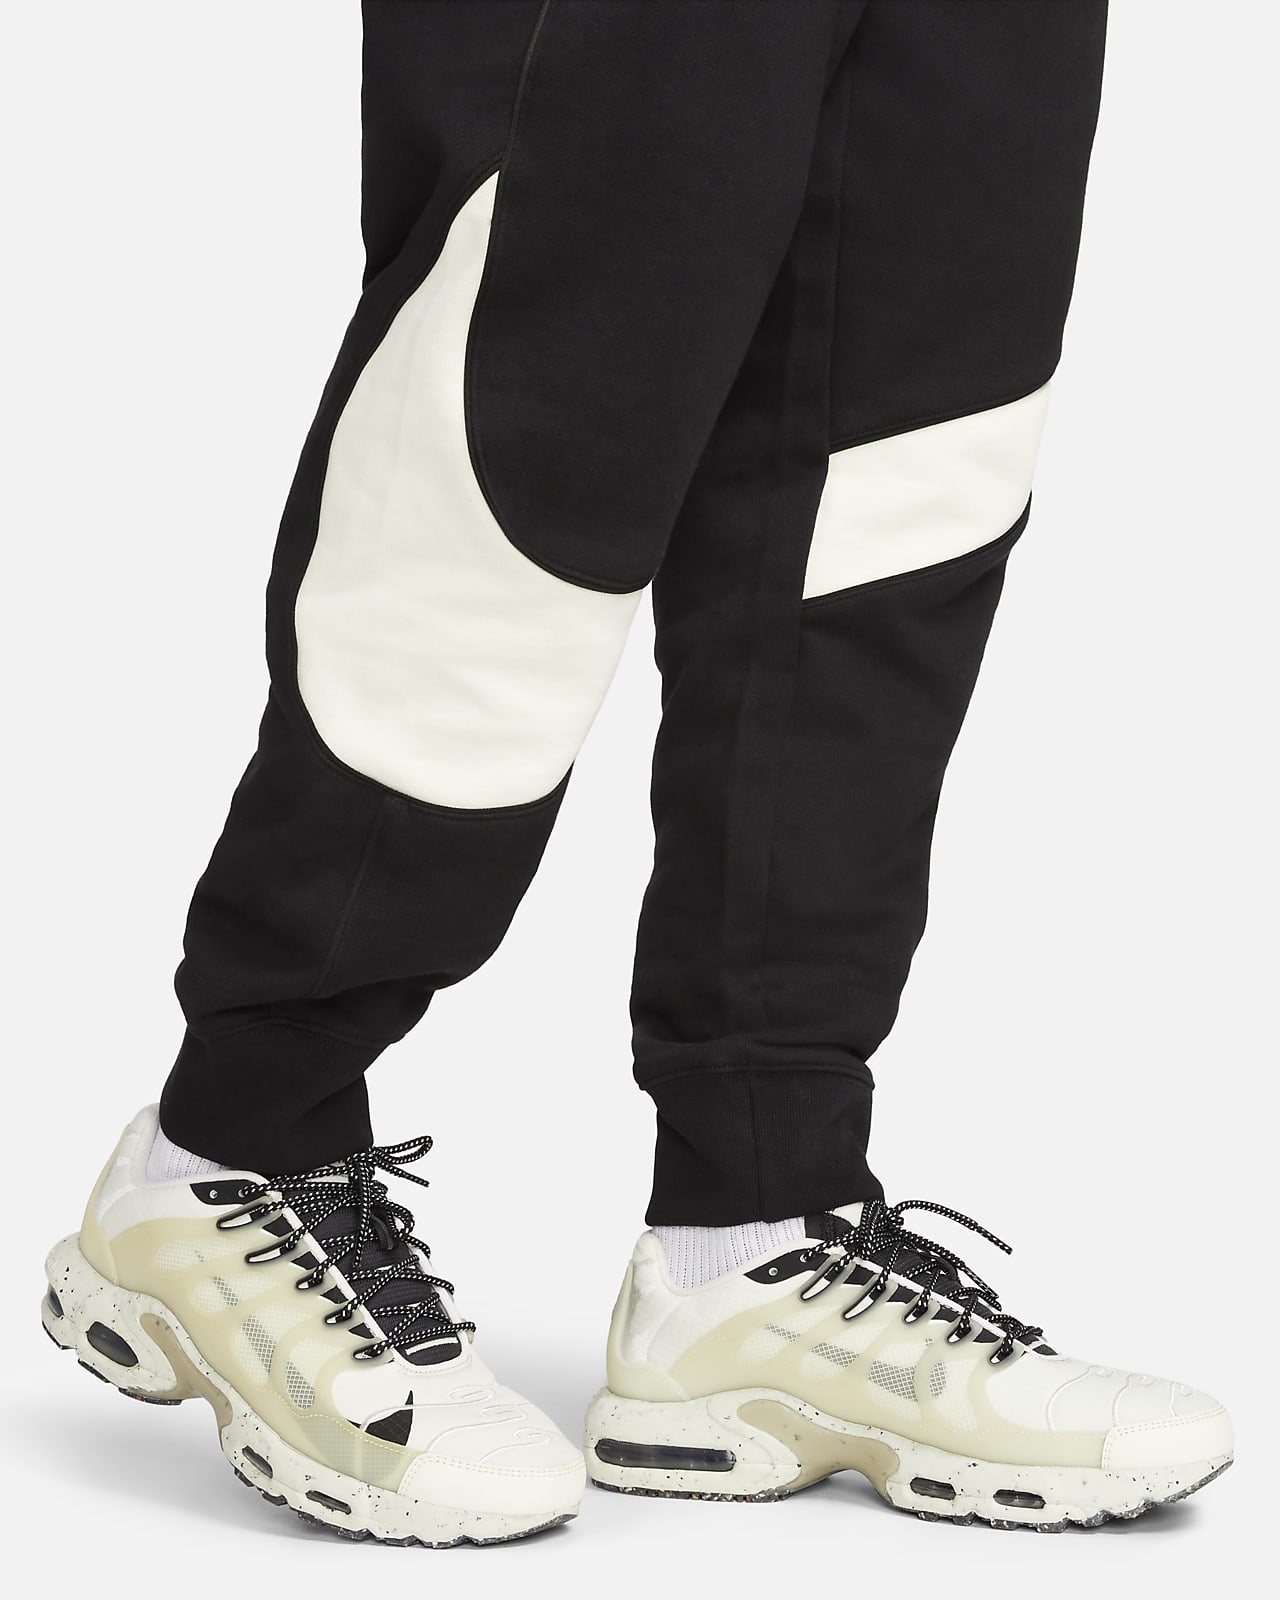 Nike Solo Swoosh Men's Fleece Pants. Nike.com